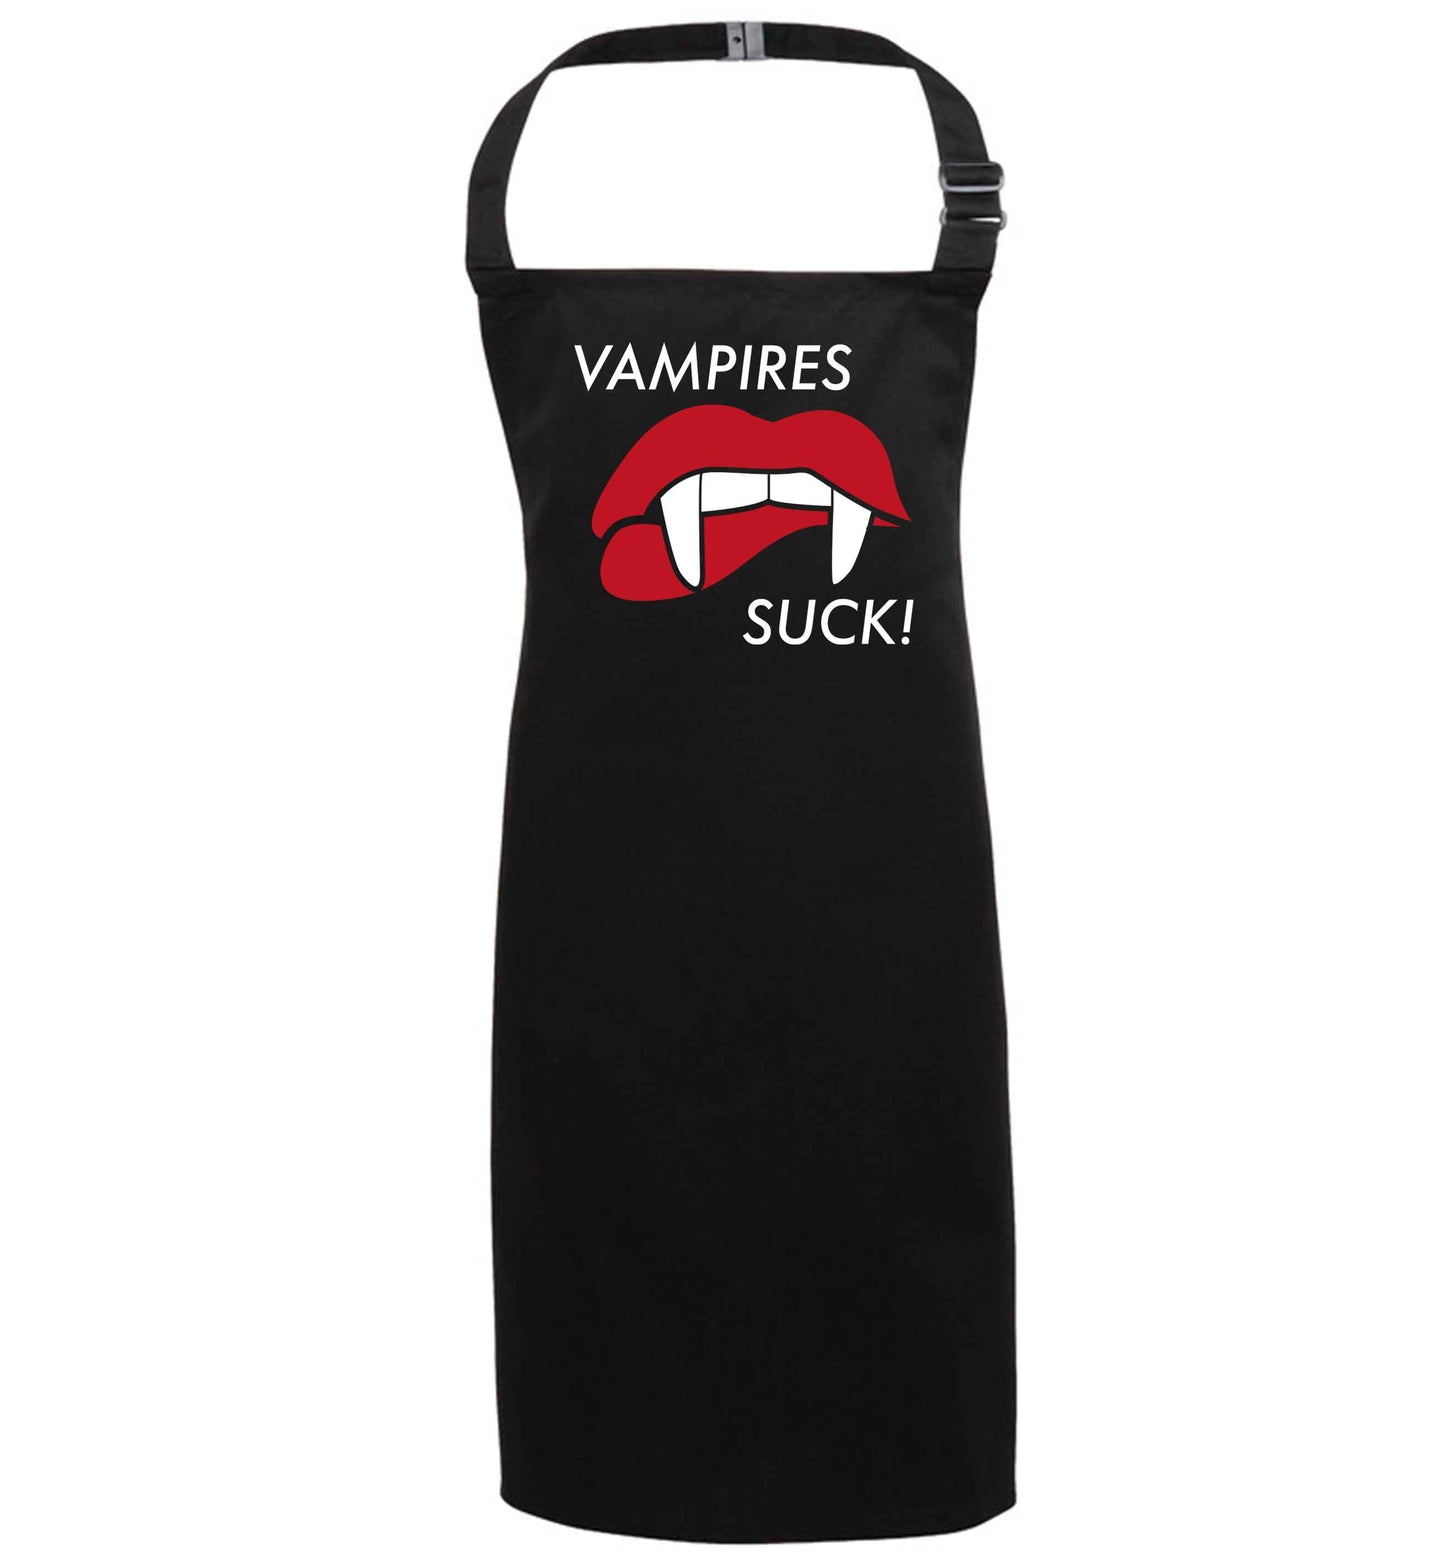 Vampires suck black apron 7-10 years